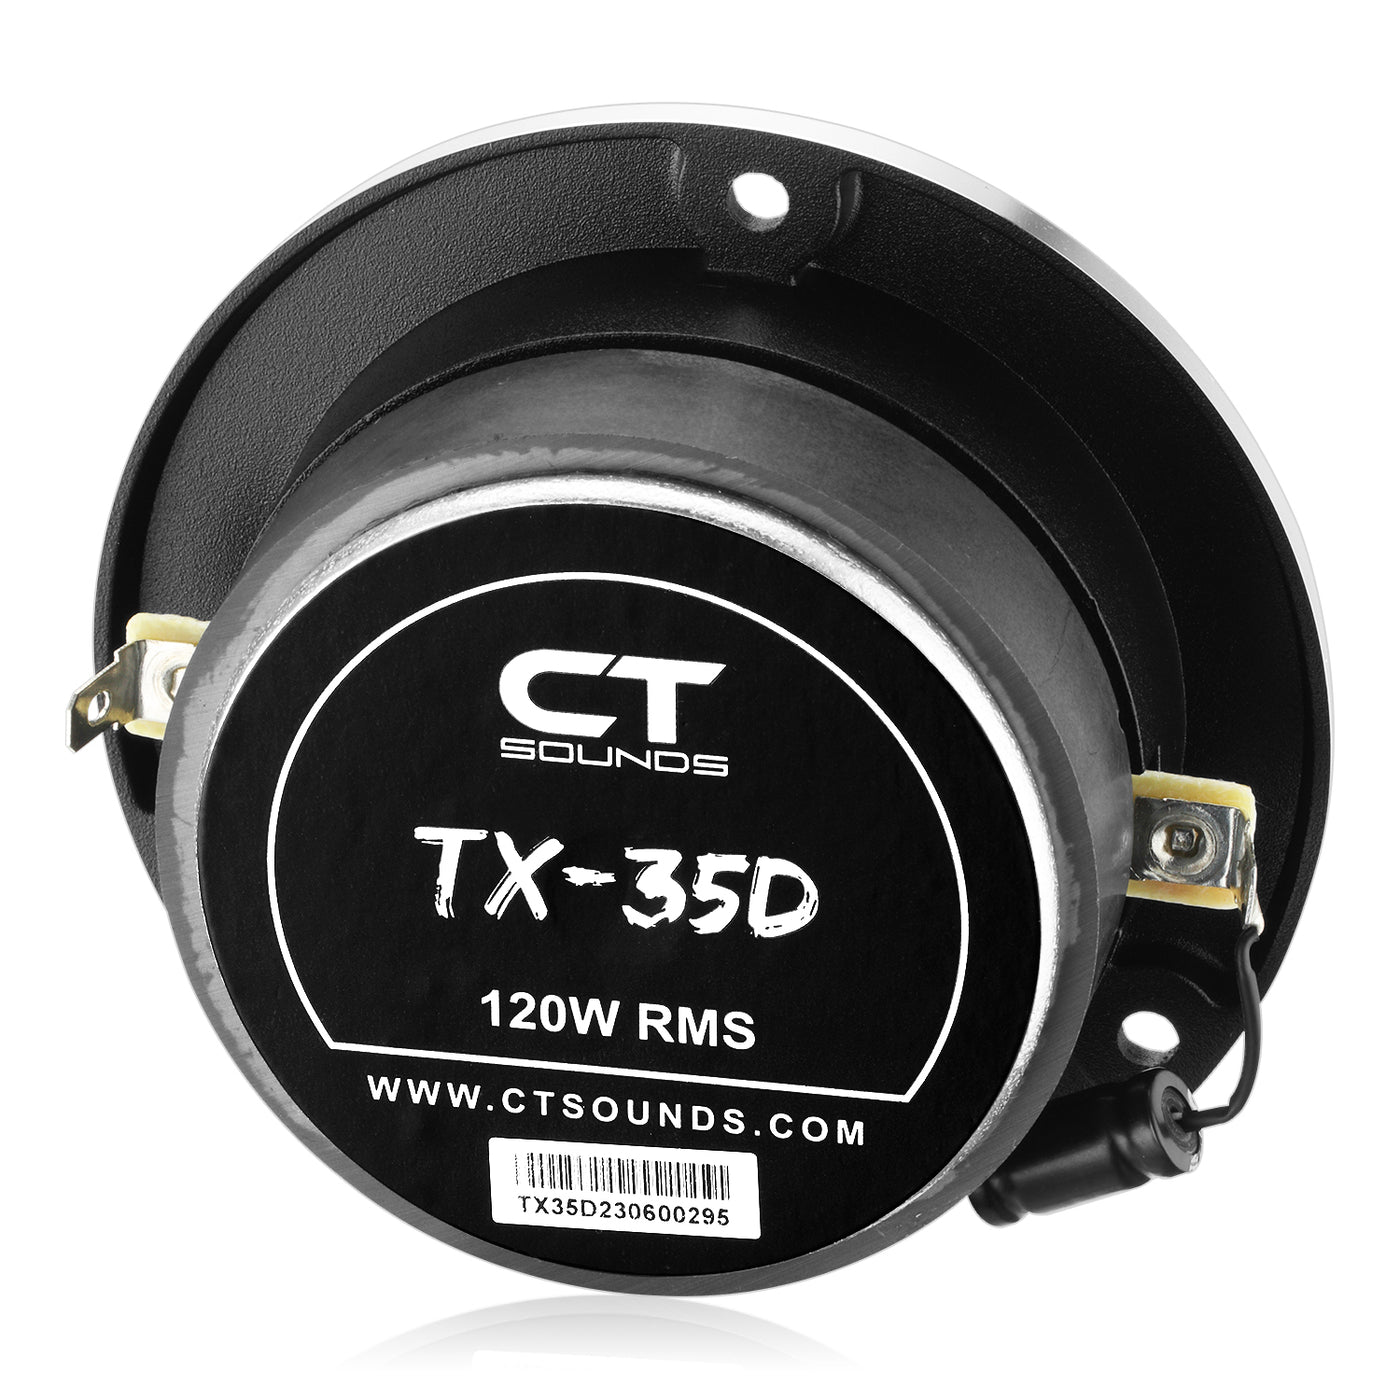 TX-35D // 3.5” 480-Watt Titanium Super Tweeters, Pair